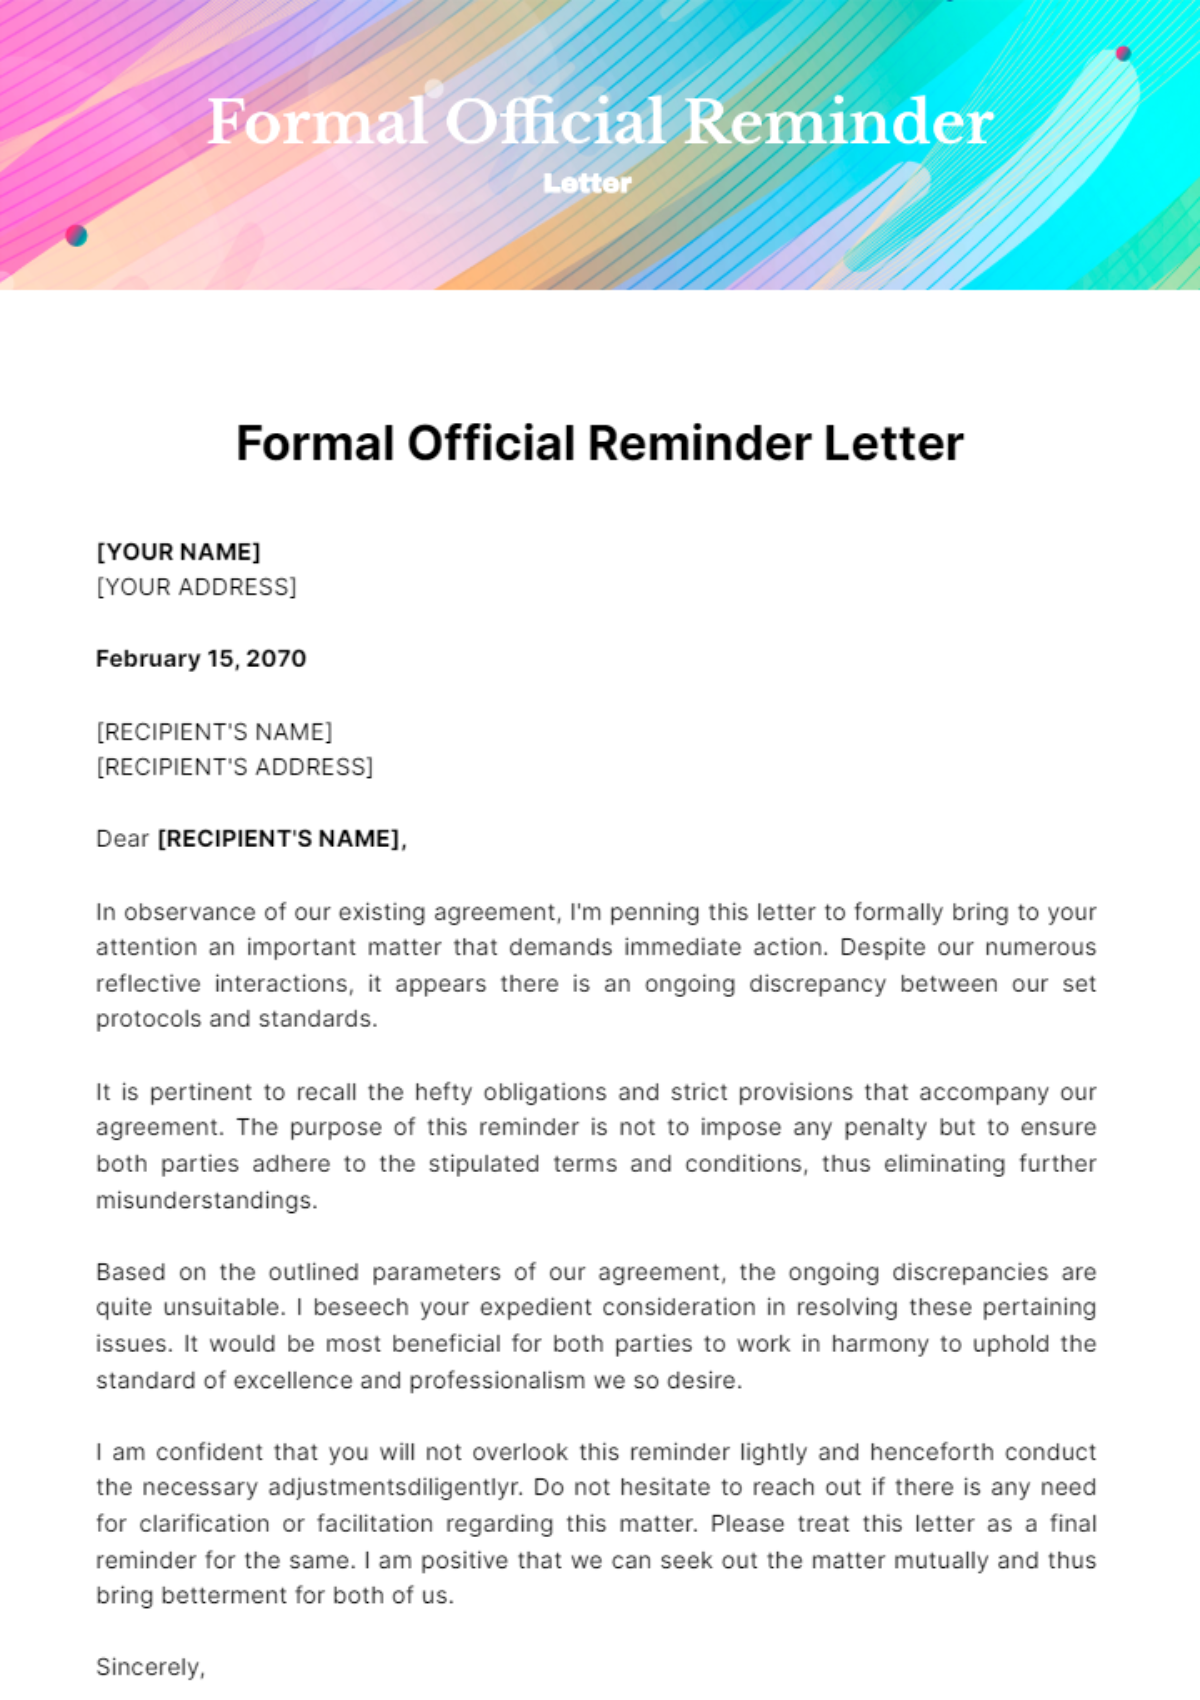 Free Formal Official Reminder Letter Template